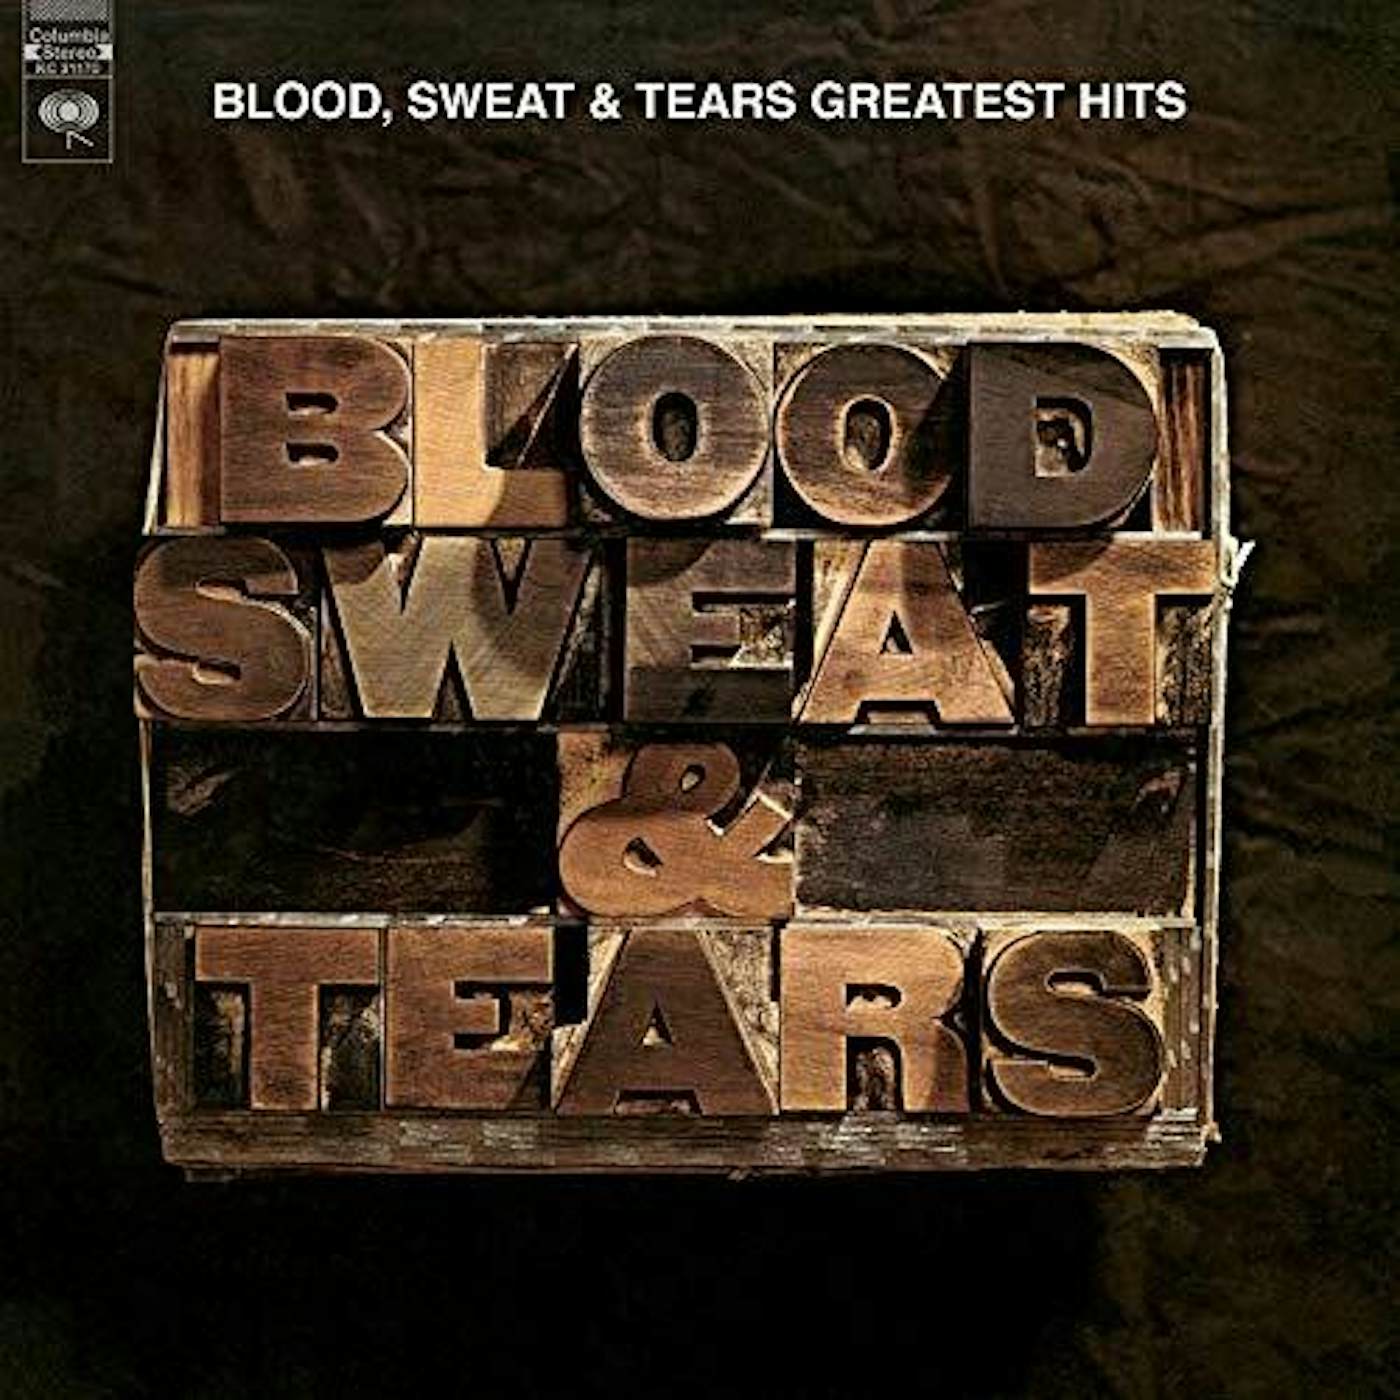 Blood, Sweat & Tears Greatest Hits Vinyl Record